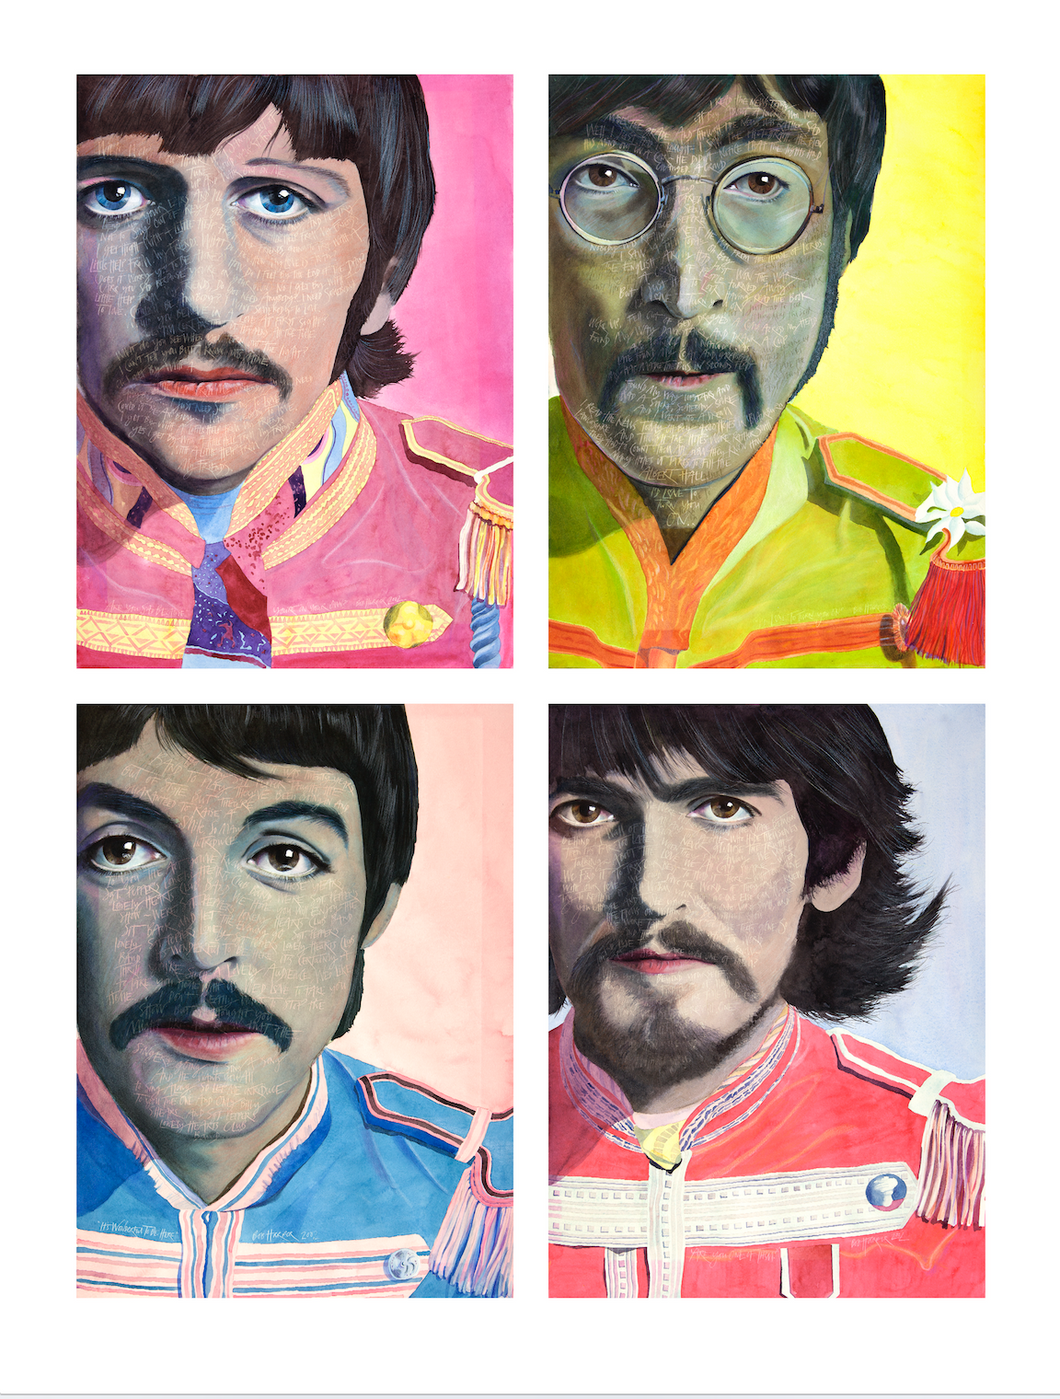 Sgt. Pepper 50 Years Ago...